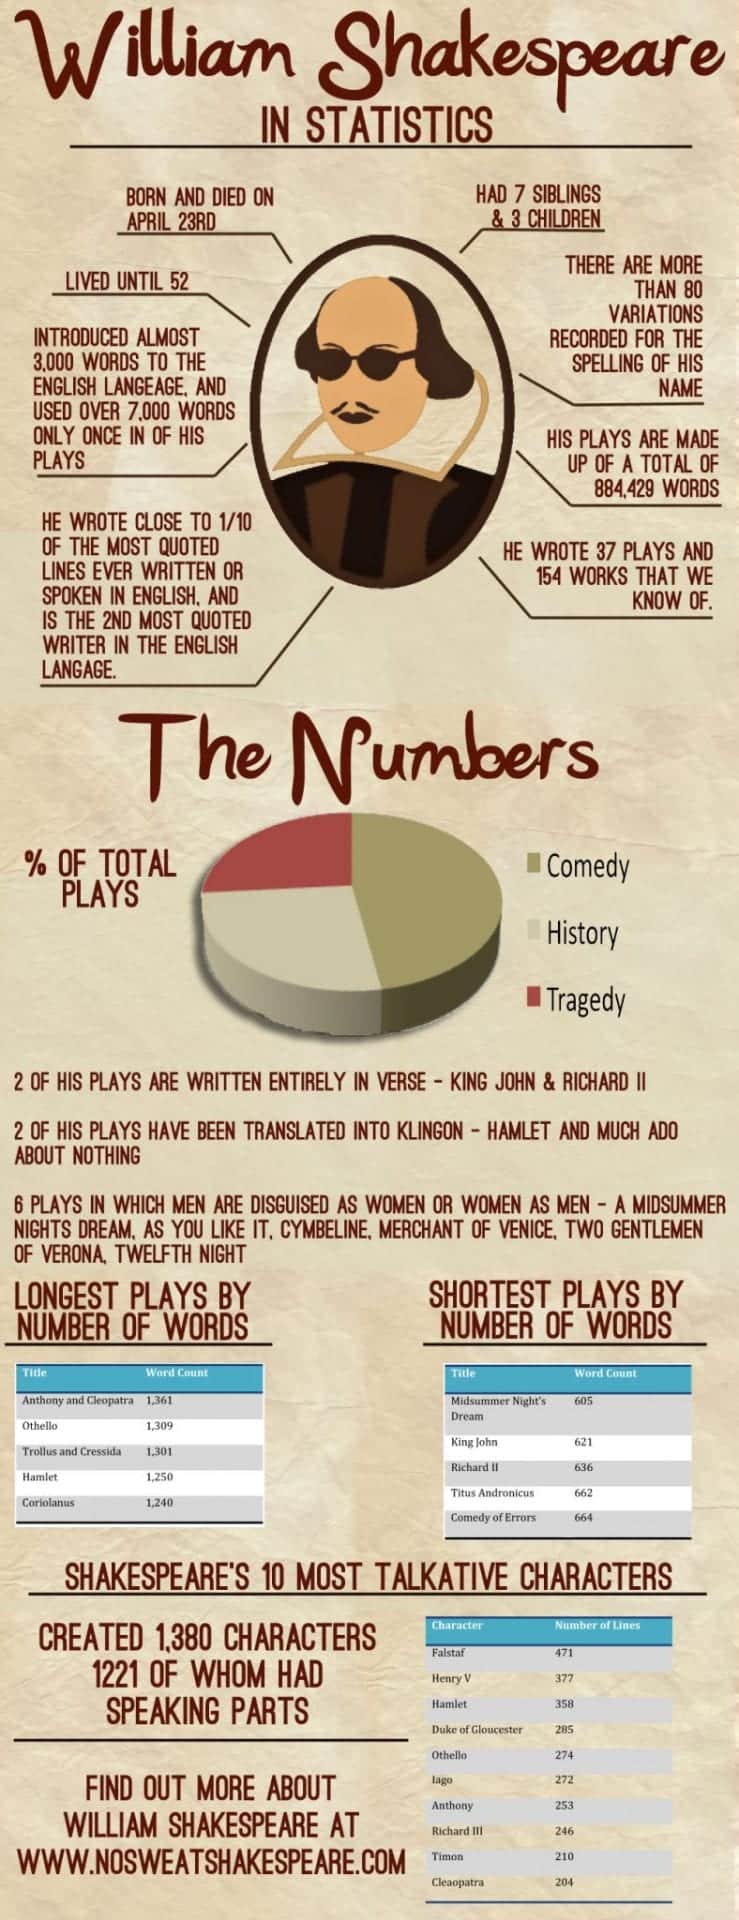 Shakespeare in statistics